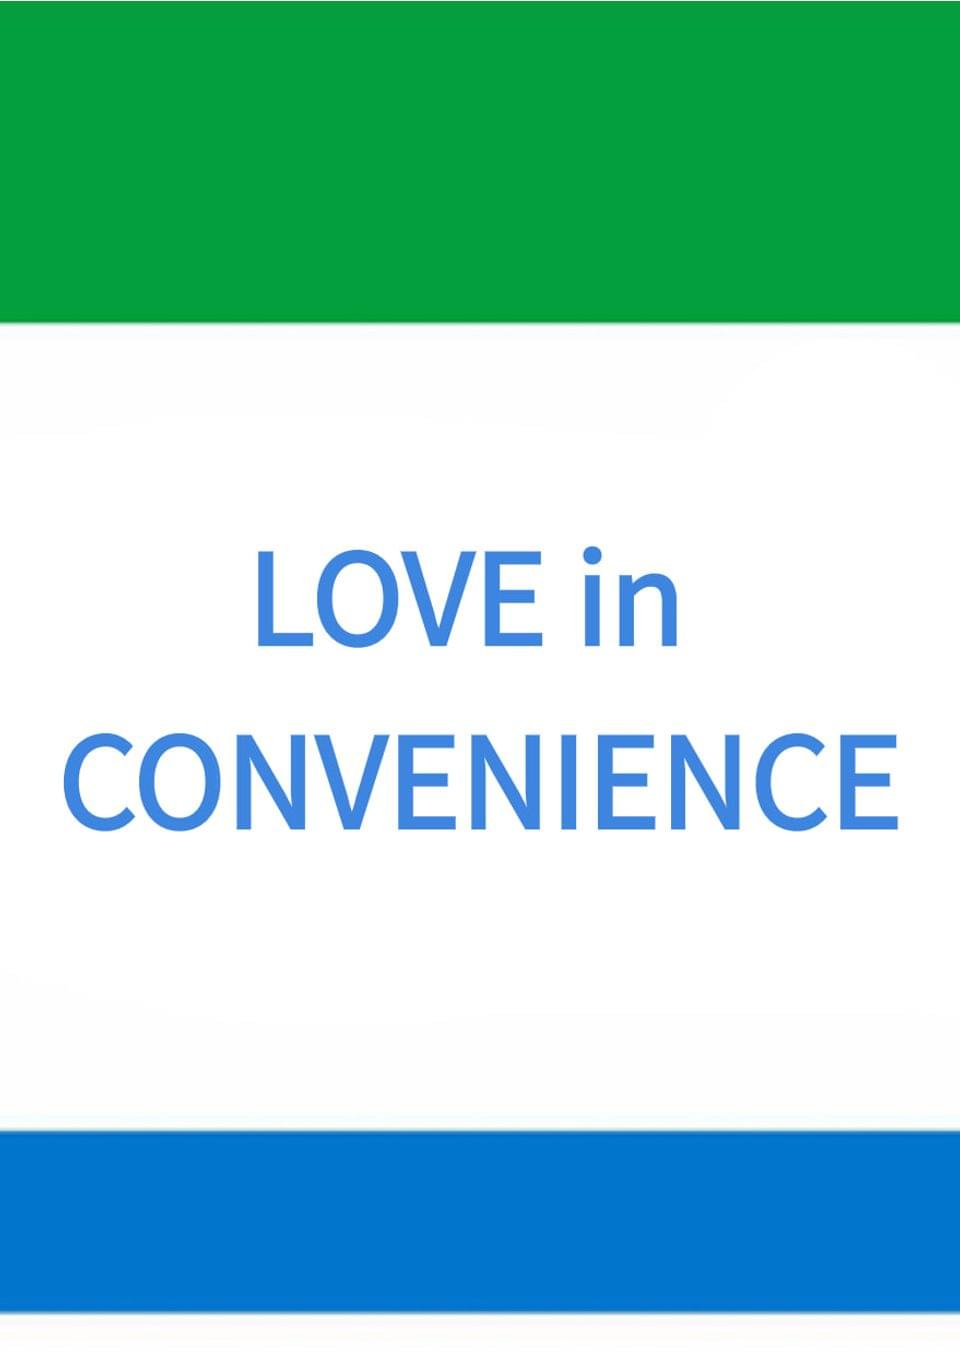 LOVE in CONVENIENCE